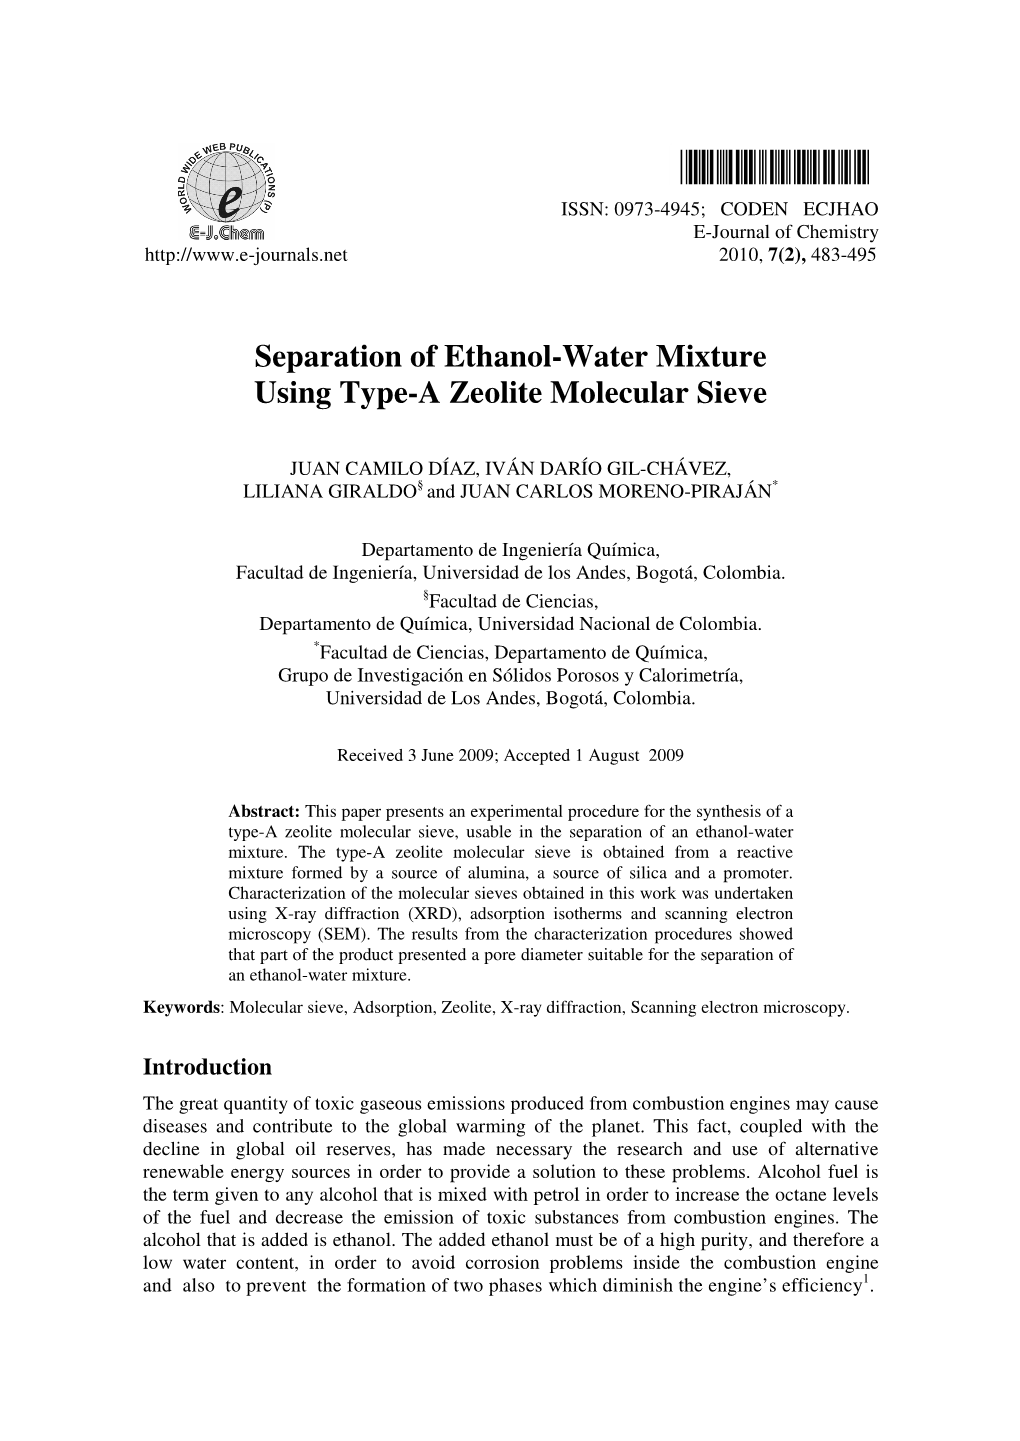 Separation of Ethanol-Water Mixture Using Type-A Zeolite Molecular Sieve